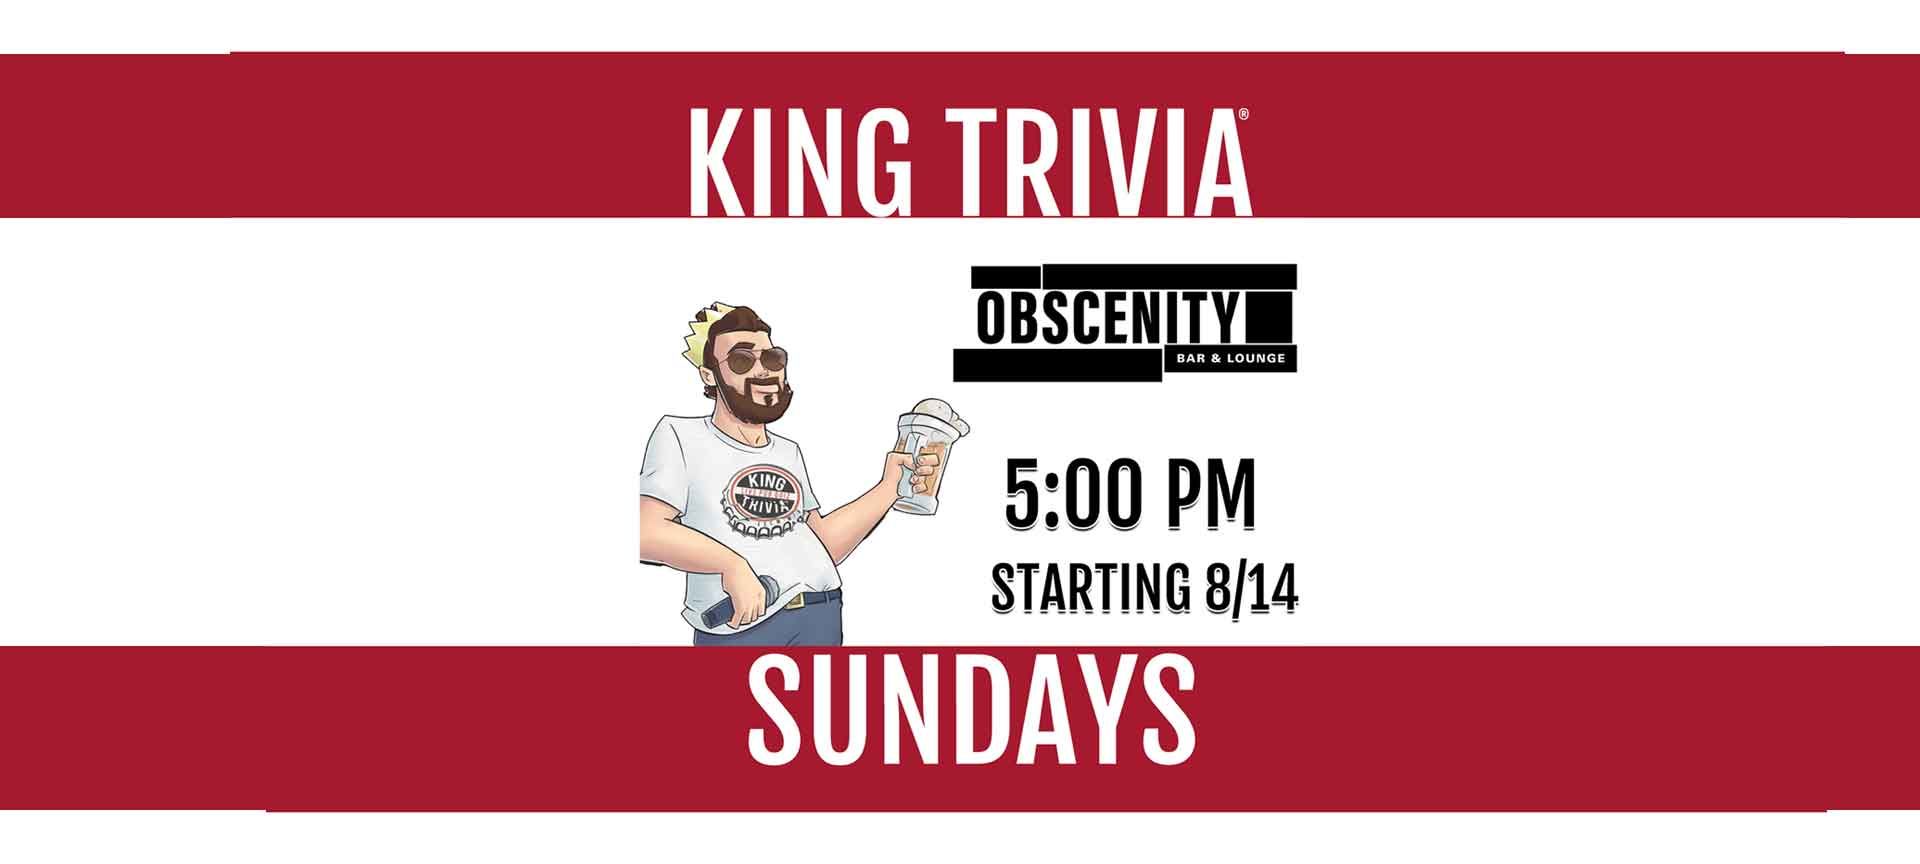 King Trivia Sundays Starting 8/14 5:00 PM